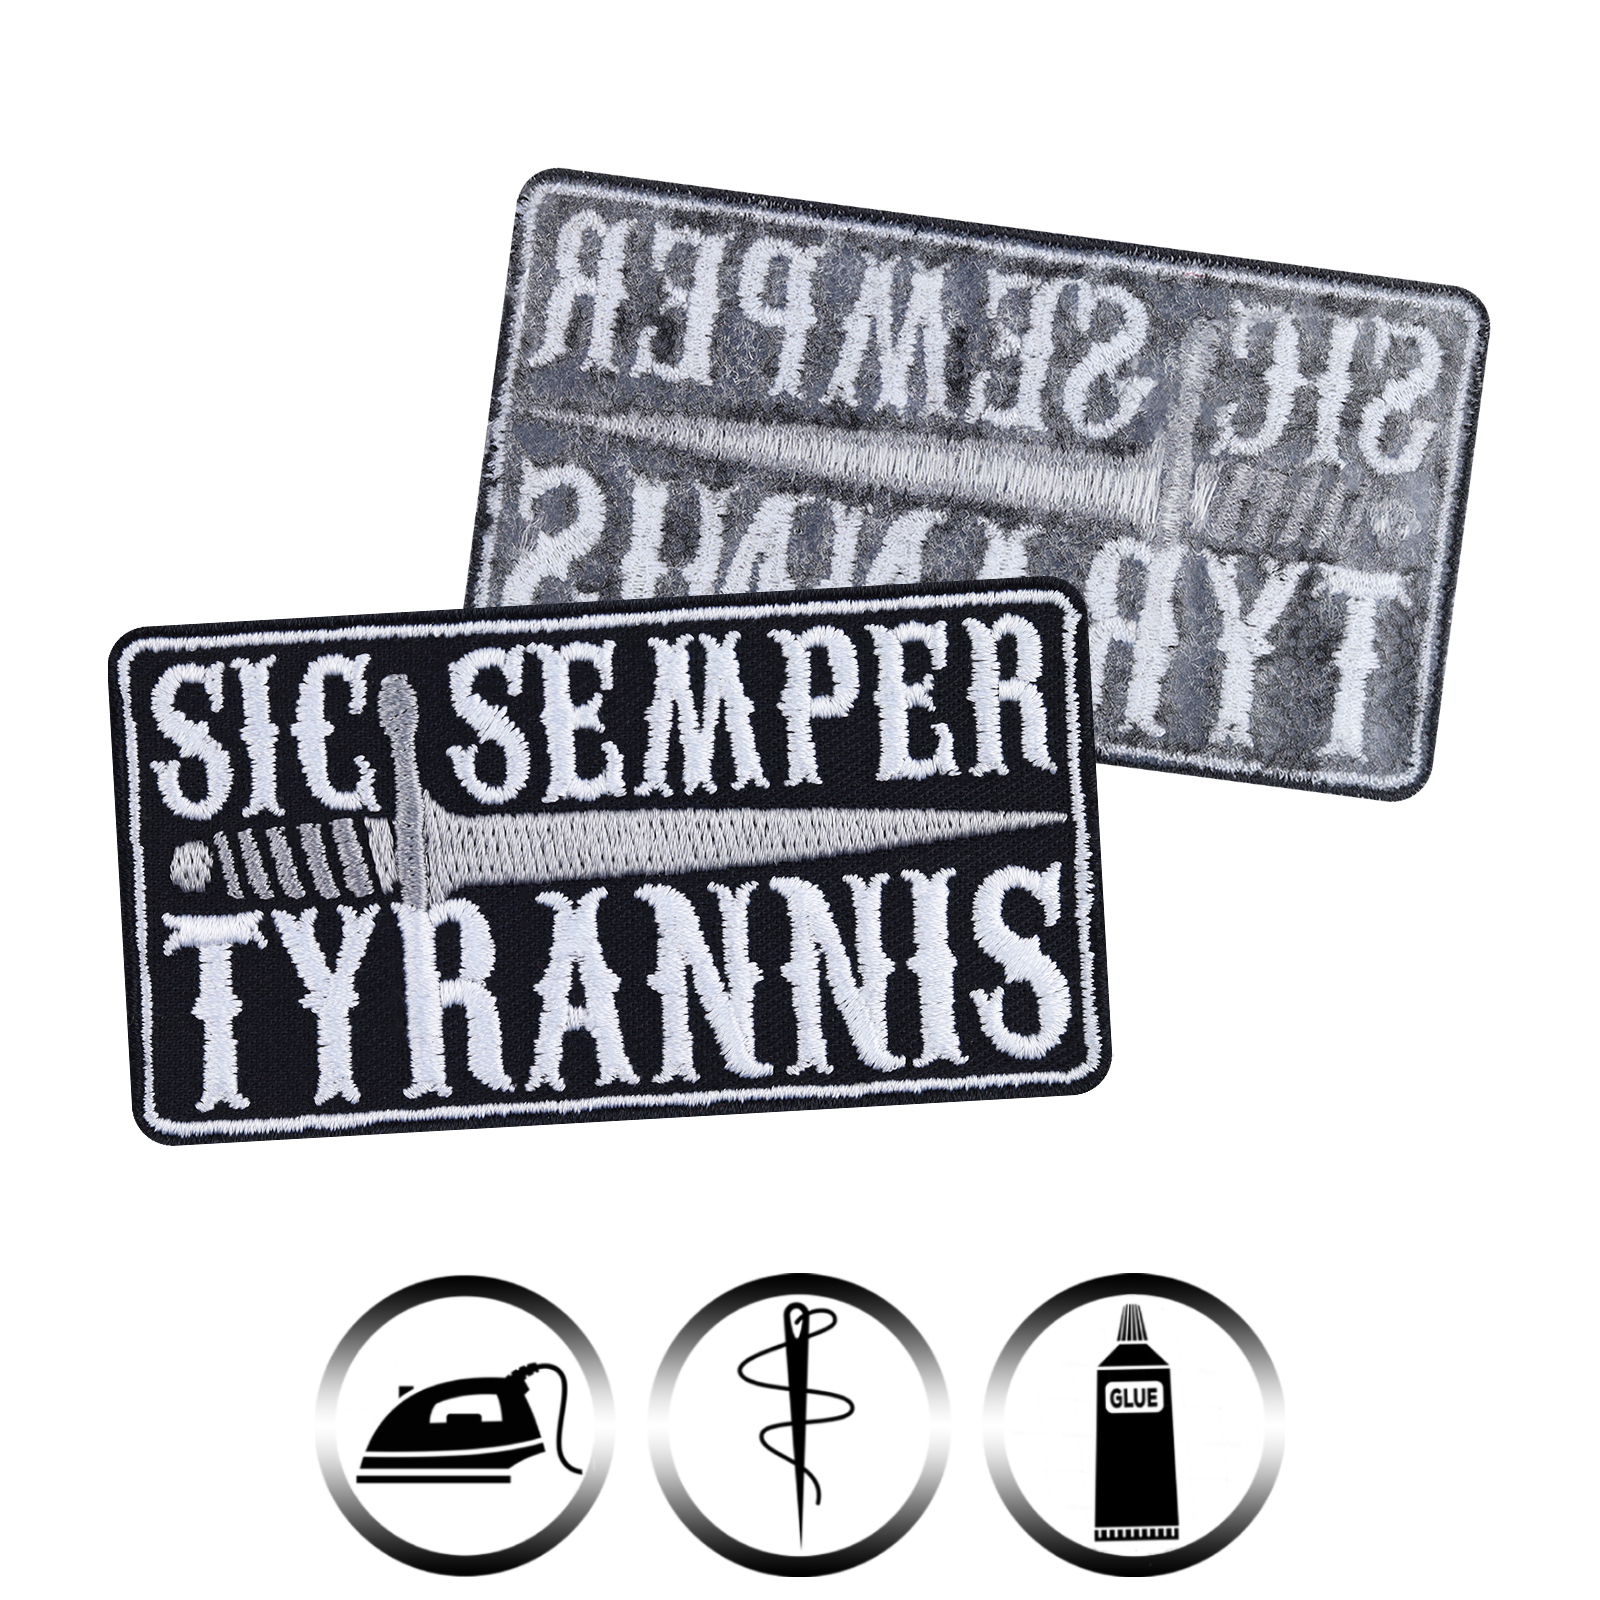 Sic Semper Tyrannis - Patch